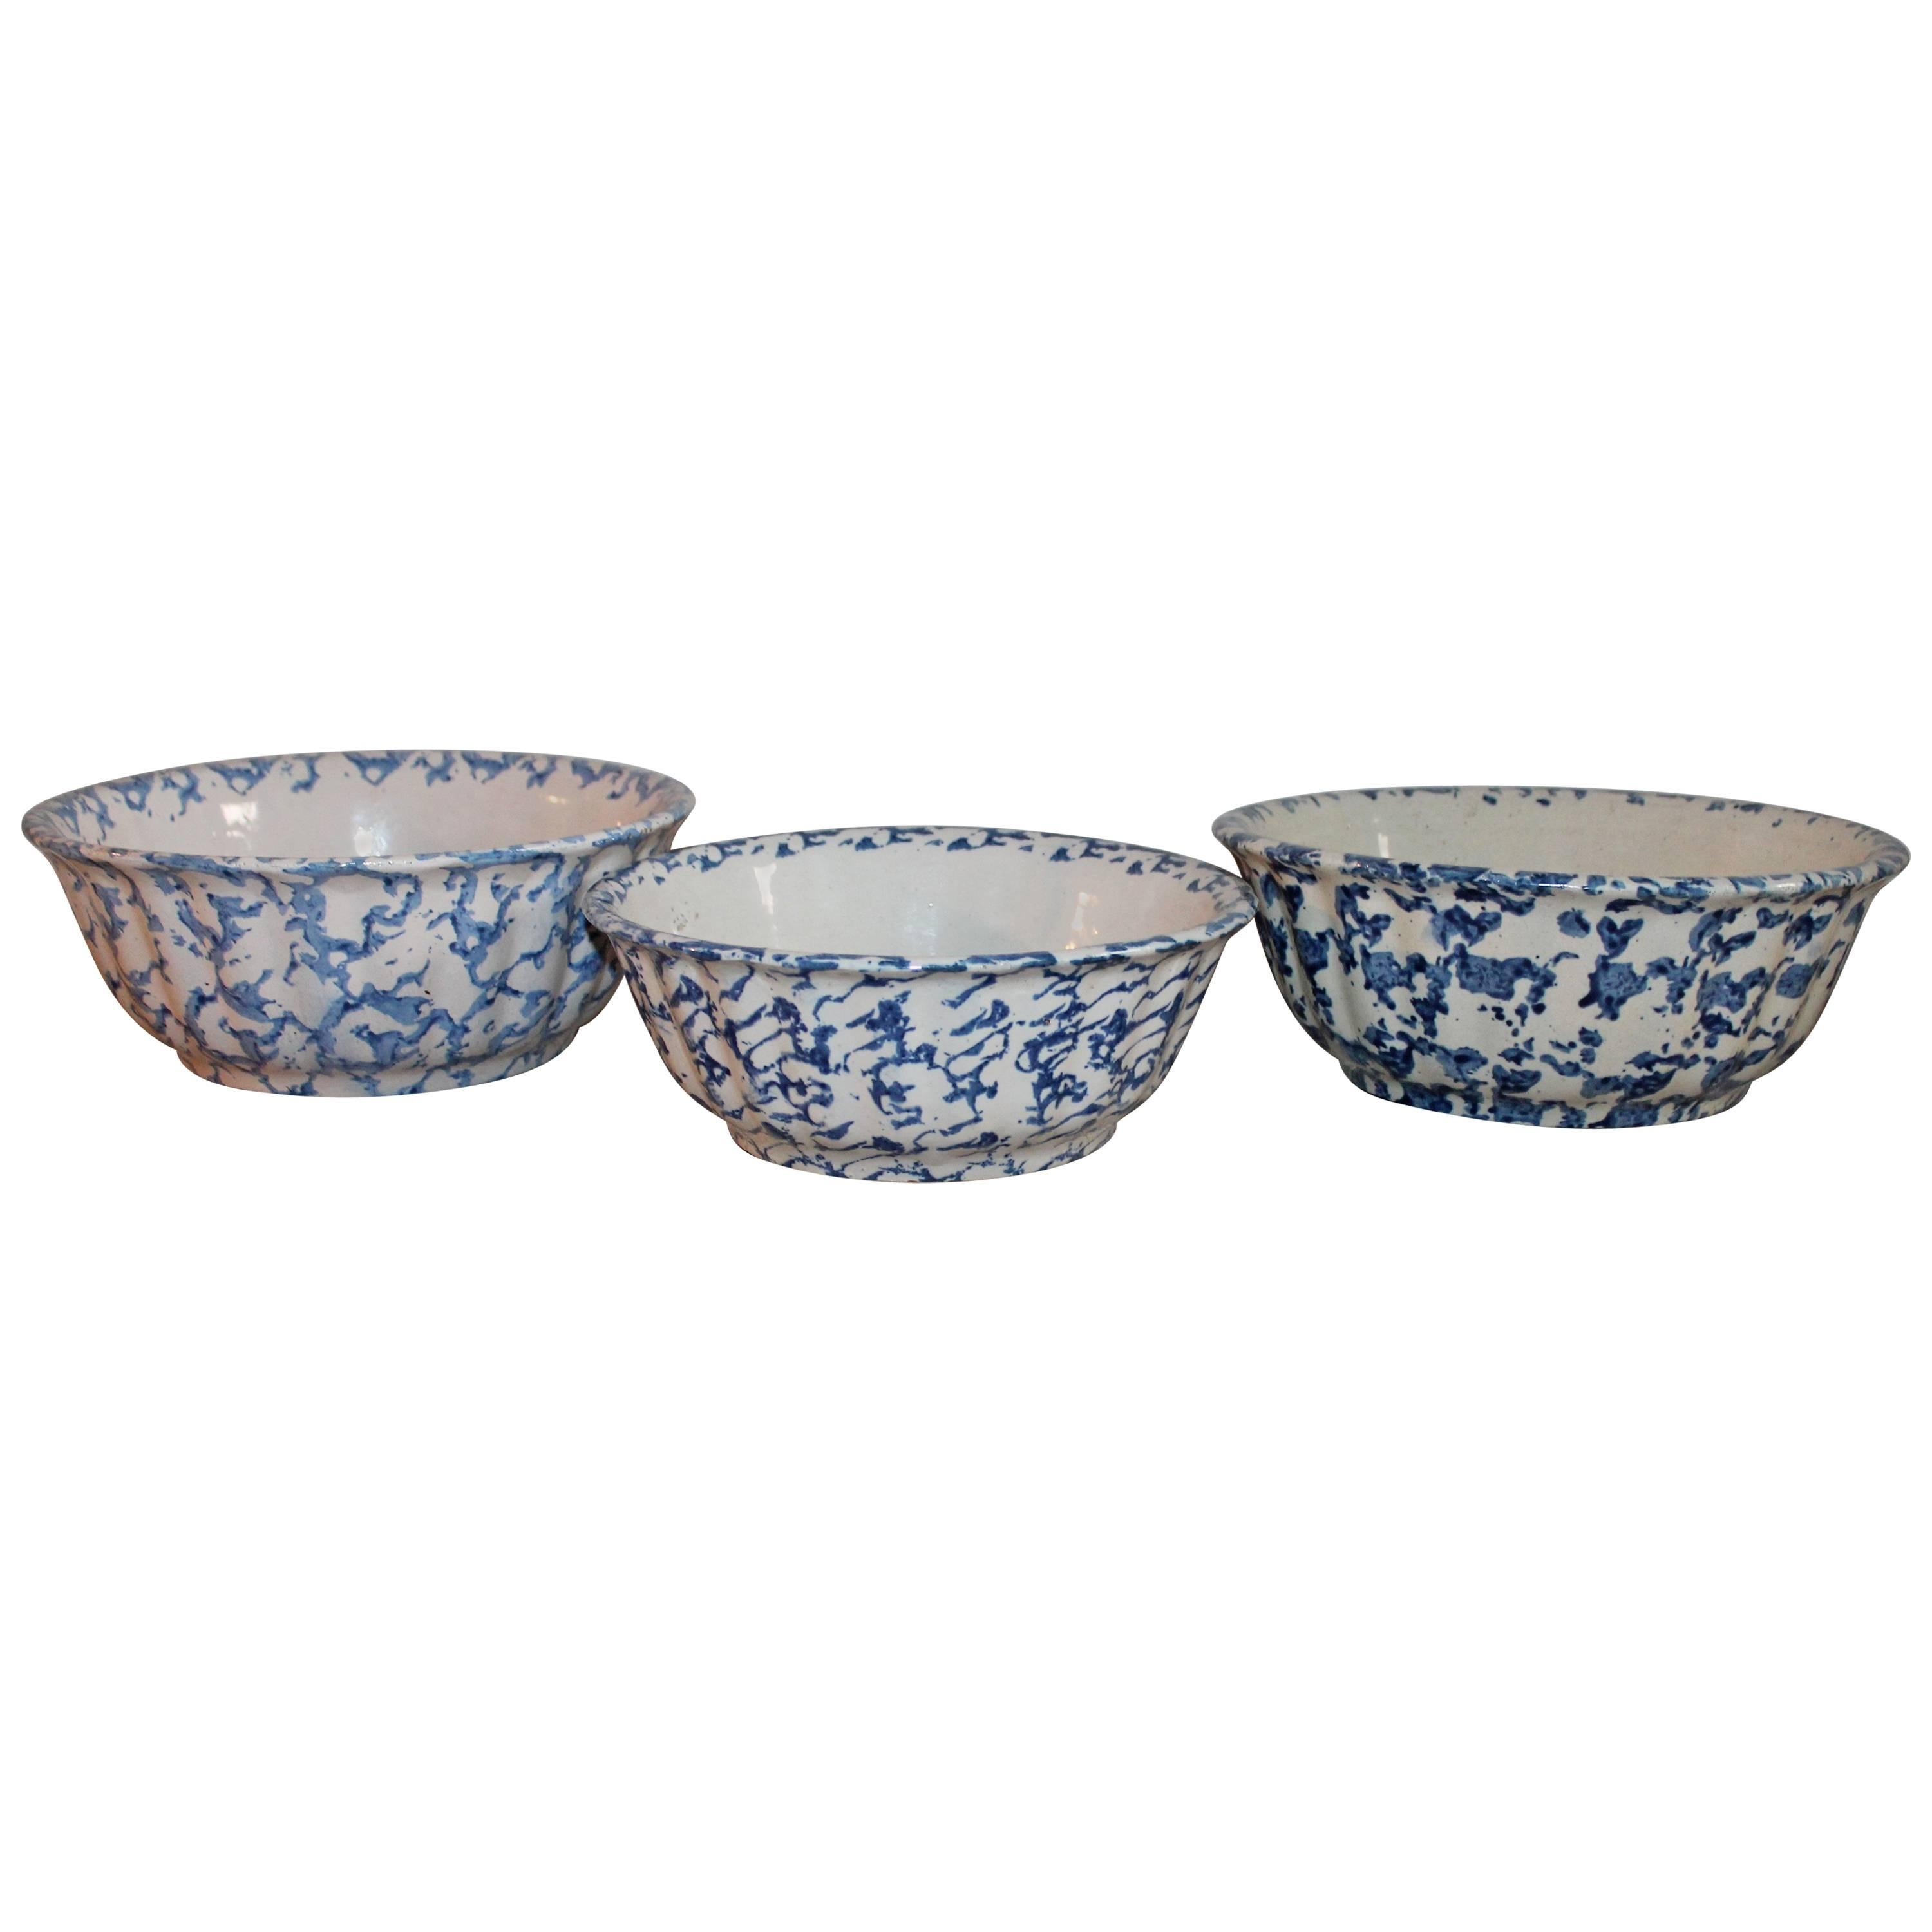 Three 19th Century Sponge Ware Pottery Scalloped Bowls